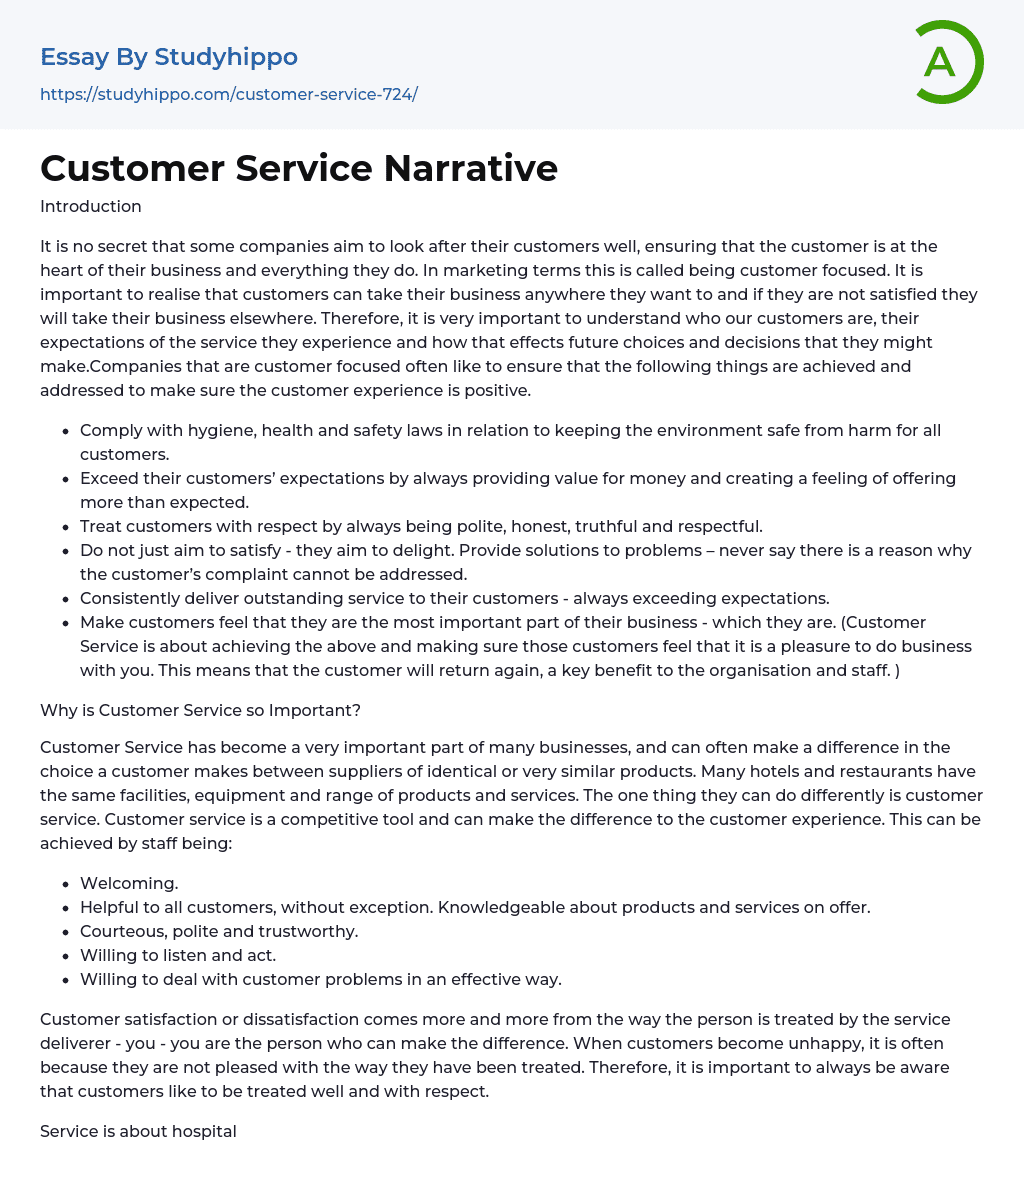 Customer Service Narrative Essay Example